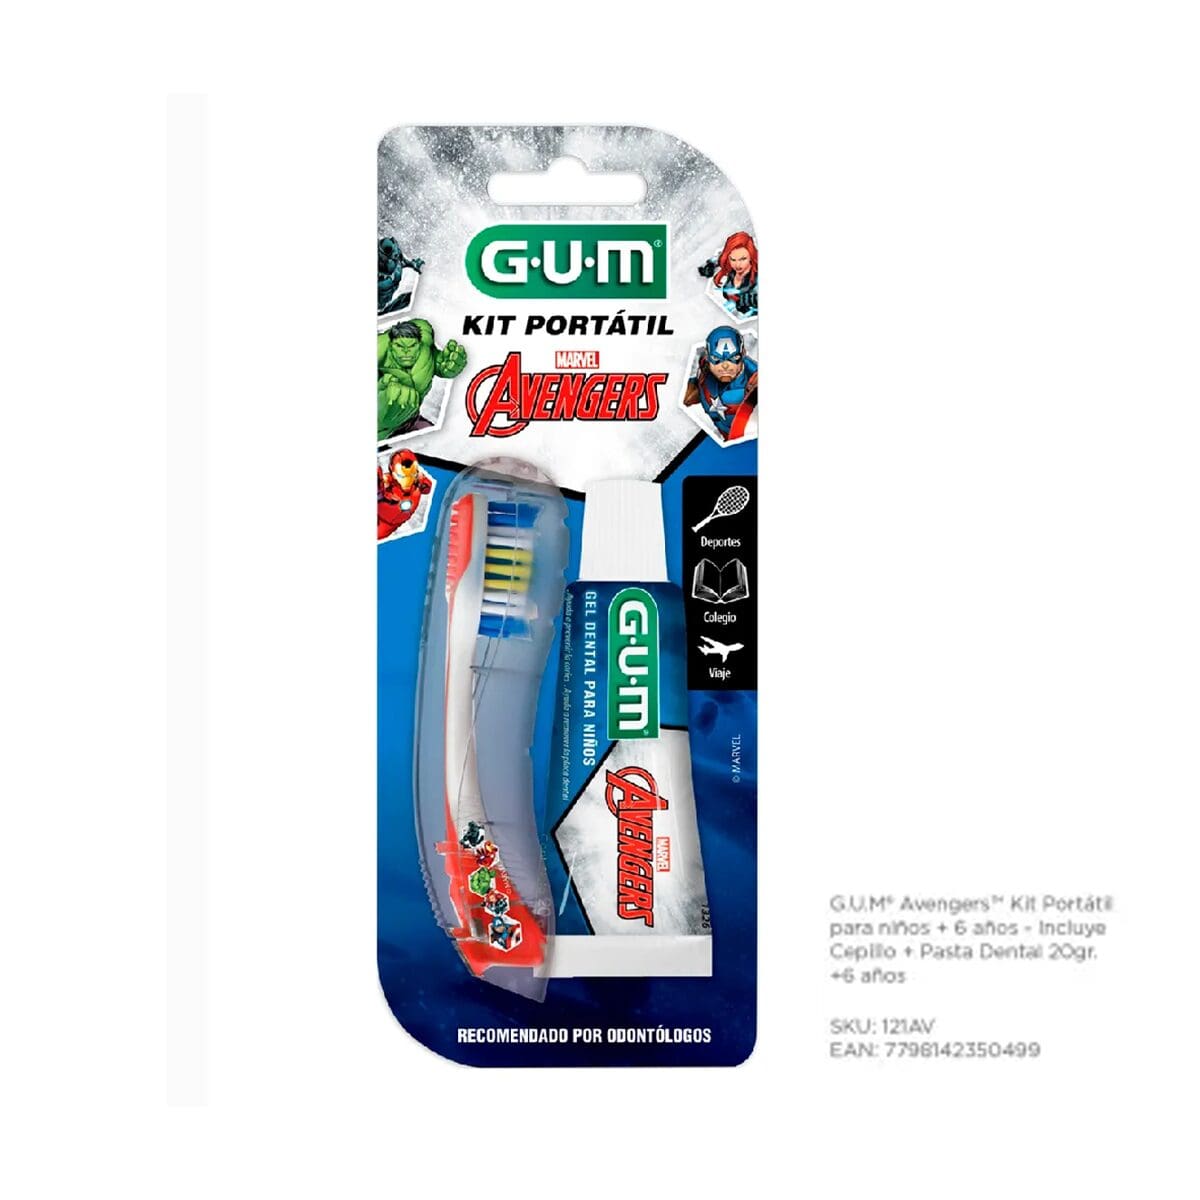 GUM Kit Viajero: Cepillo portátil Avengers para niños + pasta dental 20grs  - Farmacia Zentner